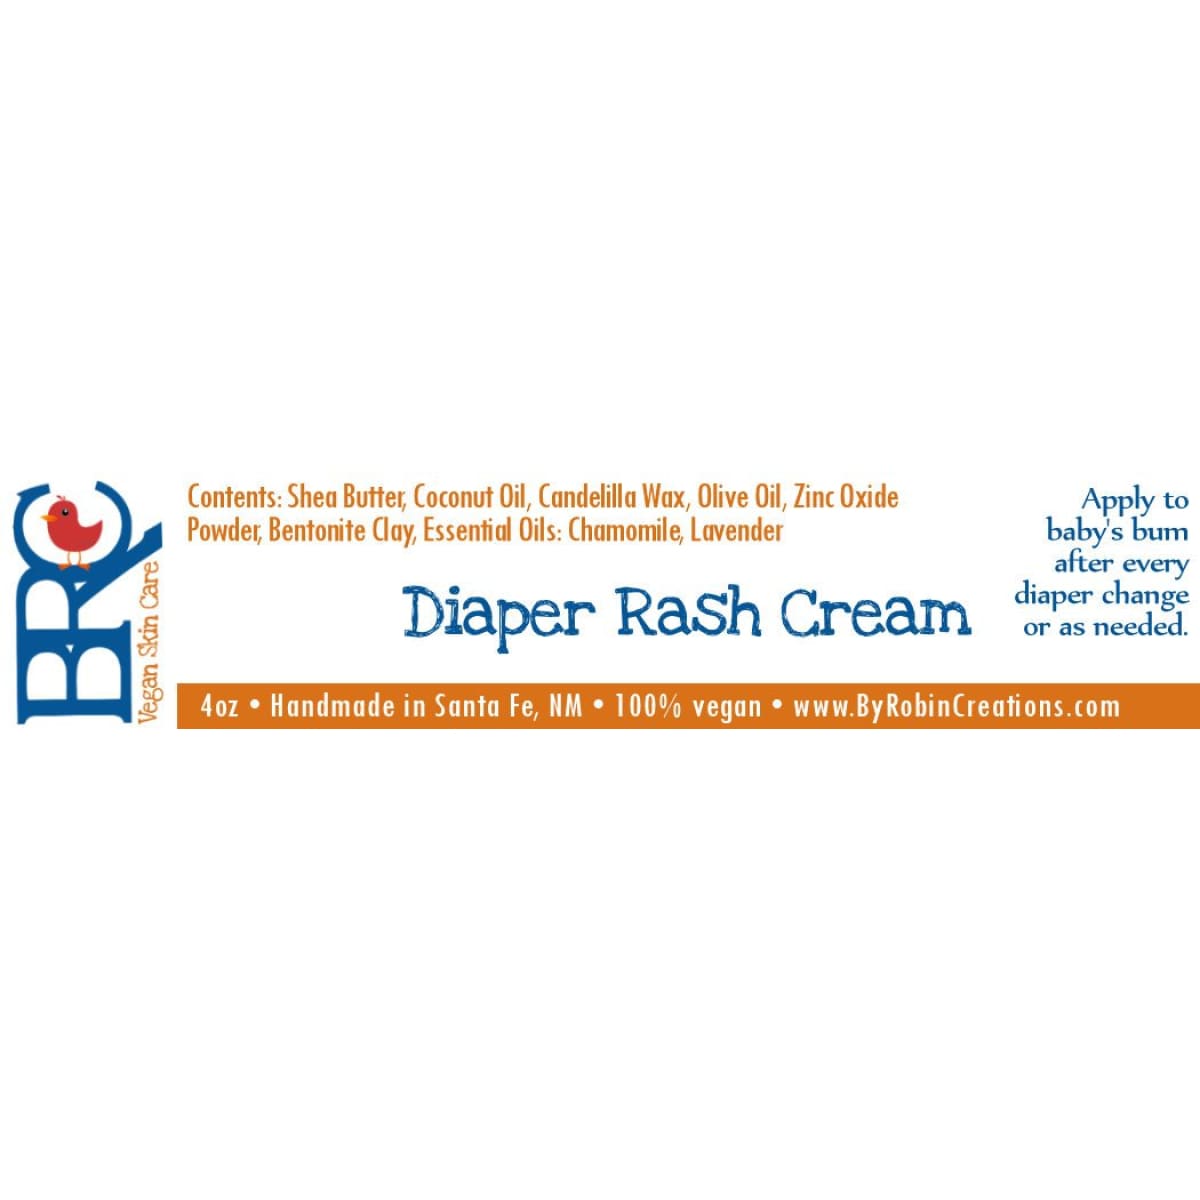 Vegan Diaper Rash Cream